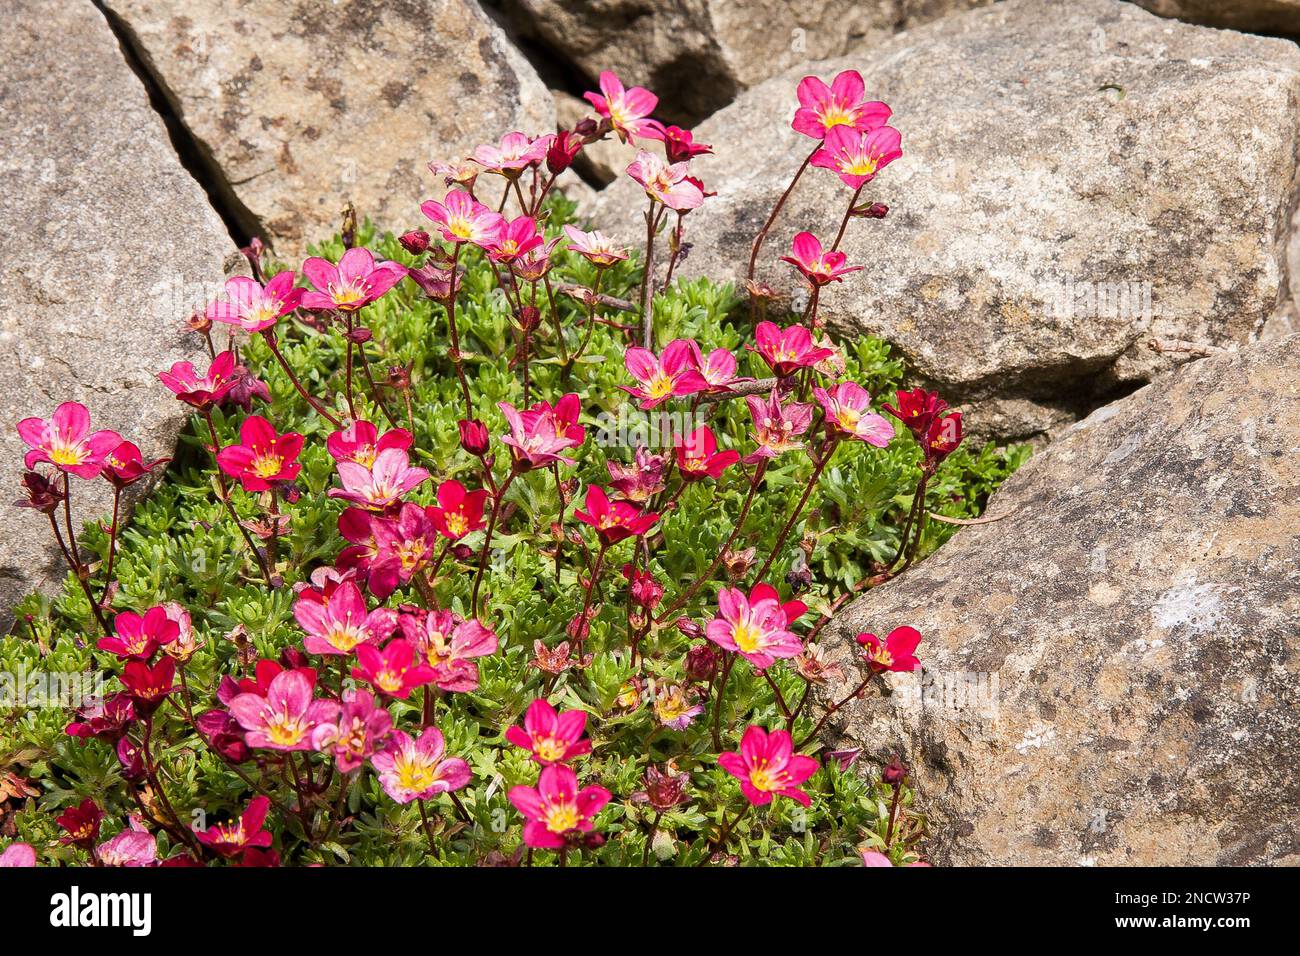 Saxifrage flowers amongst rocks Stock Photo